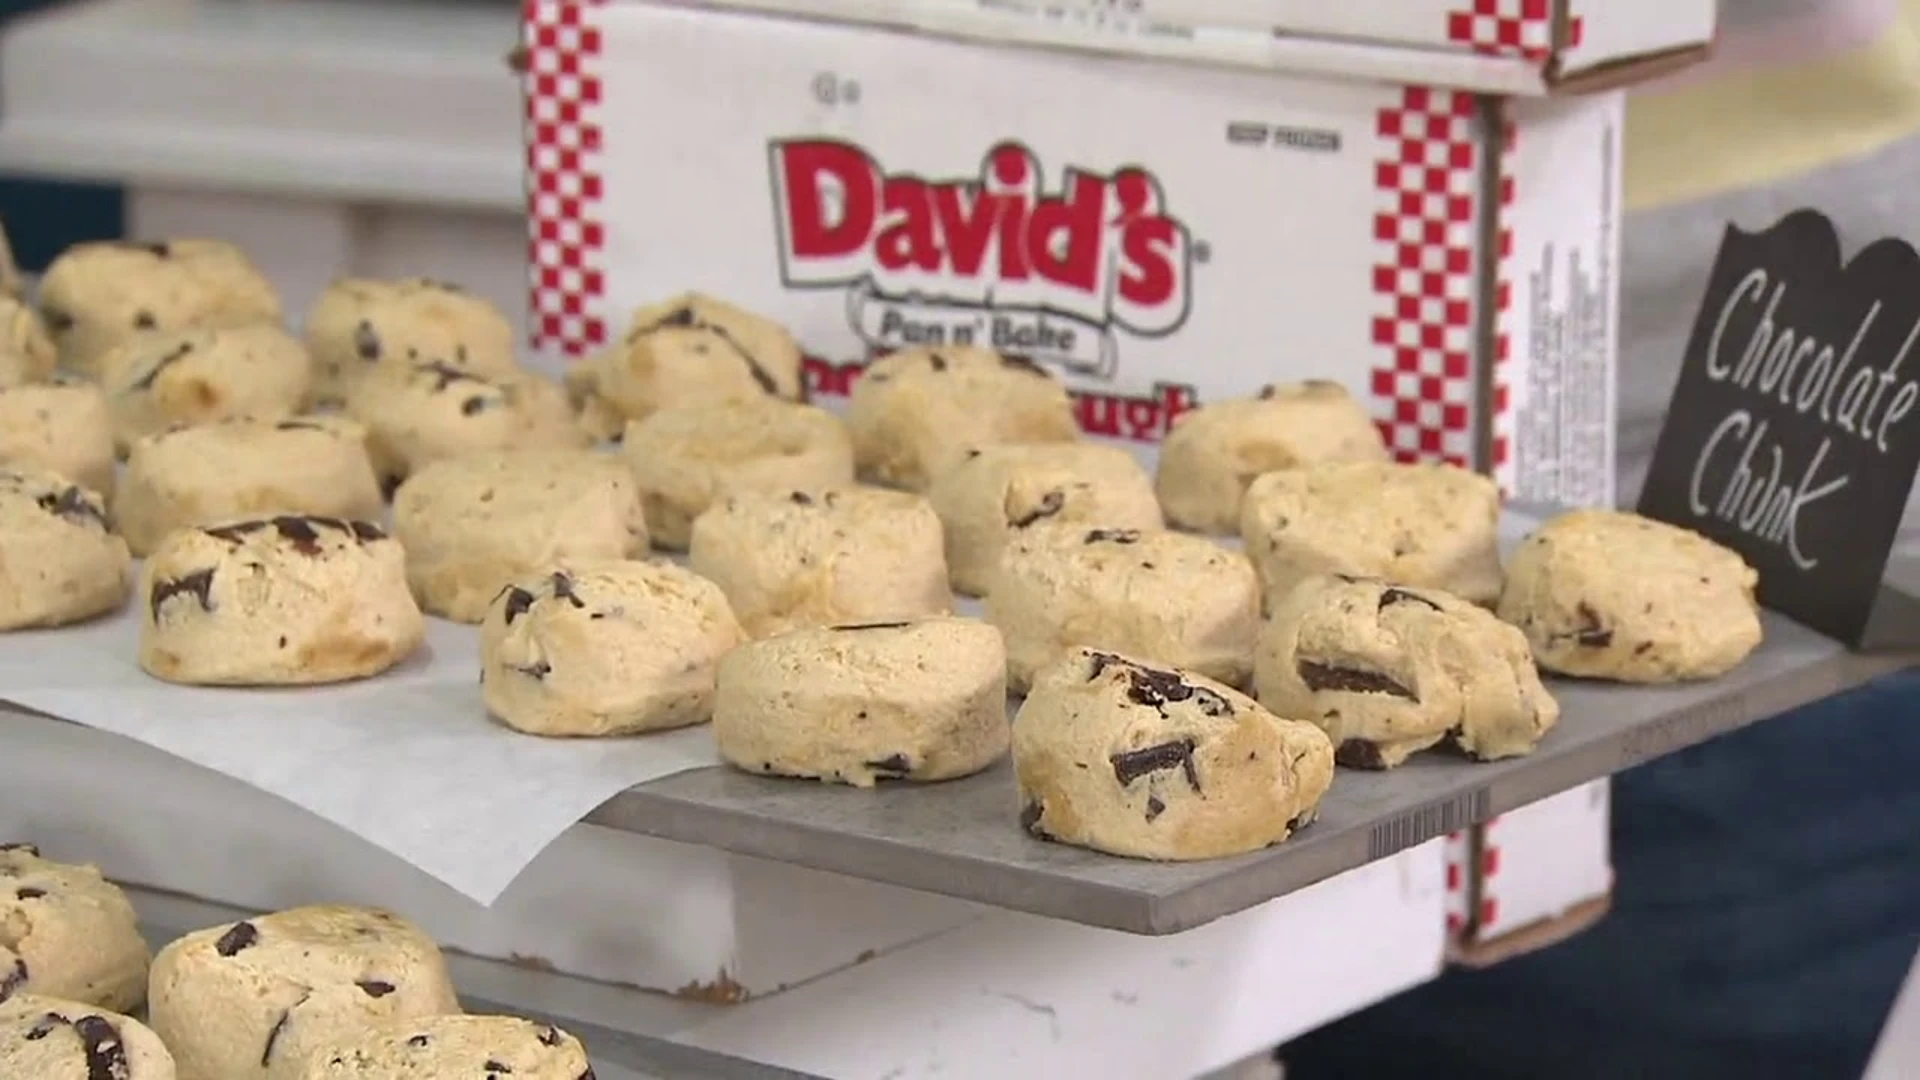 David's Cookies Promo Codes